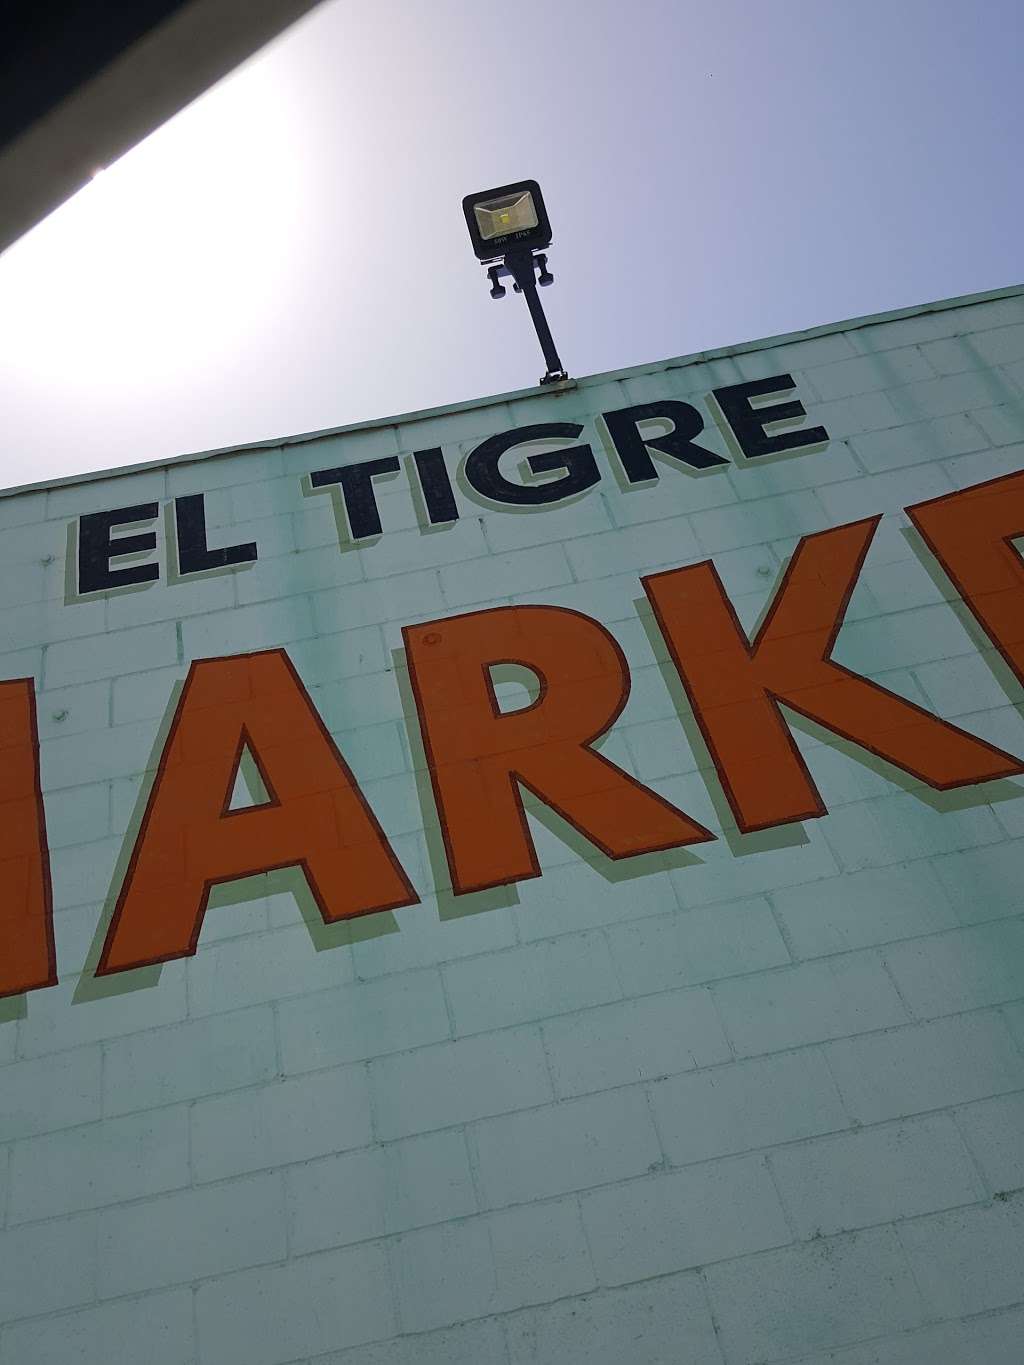 El Tigre Market | 4255 Union Pacific Ave, Los Angeles, CA 90023, USA